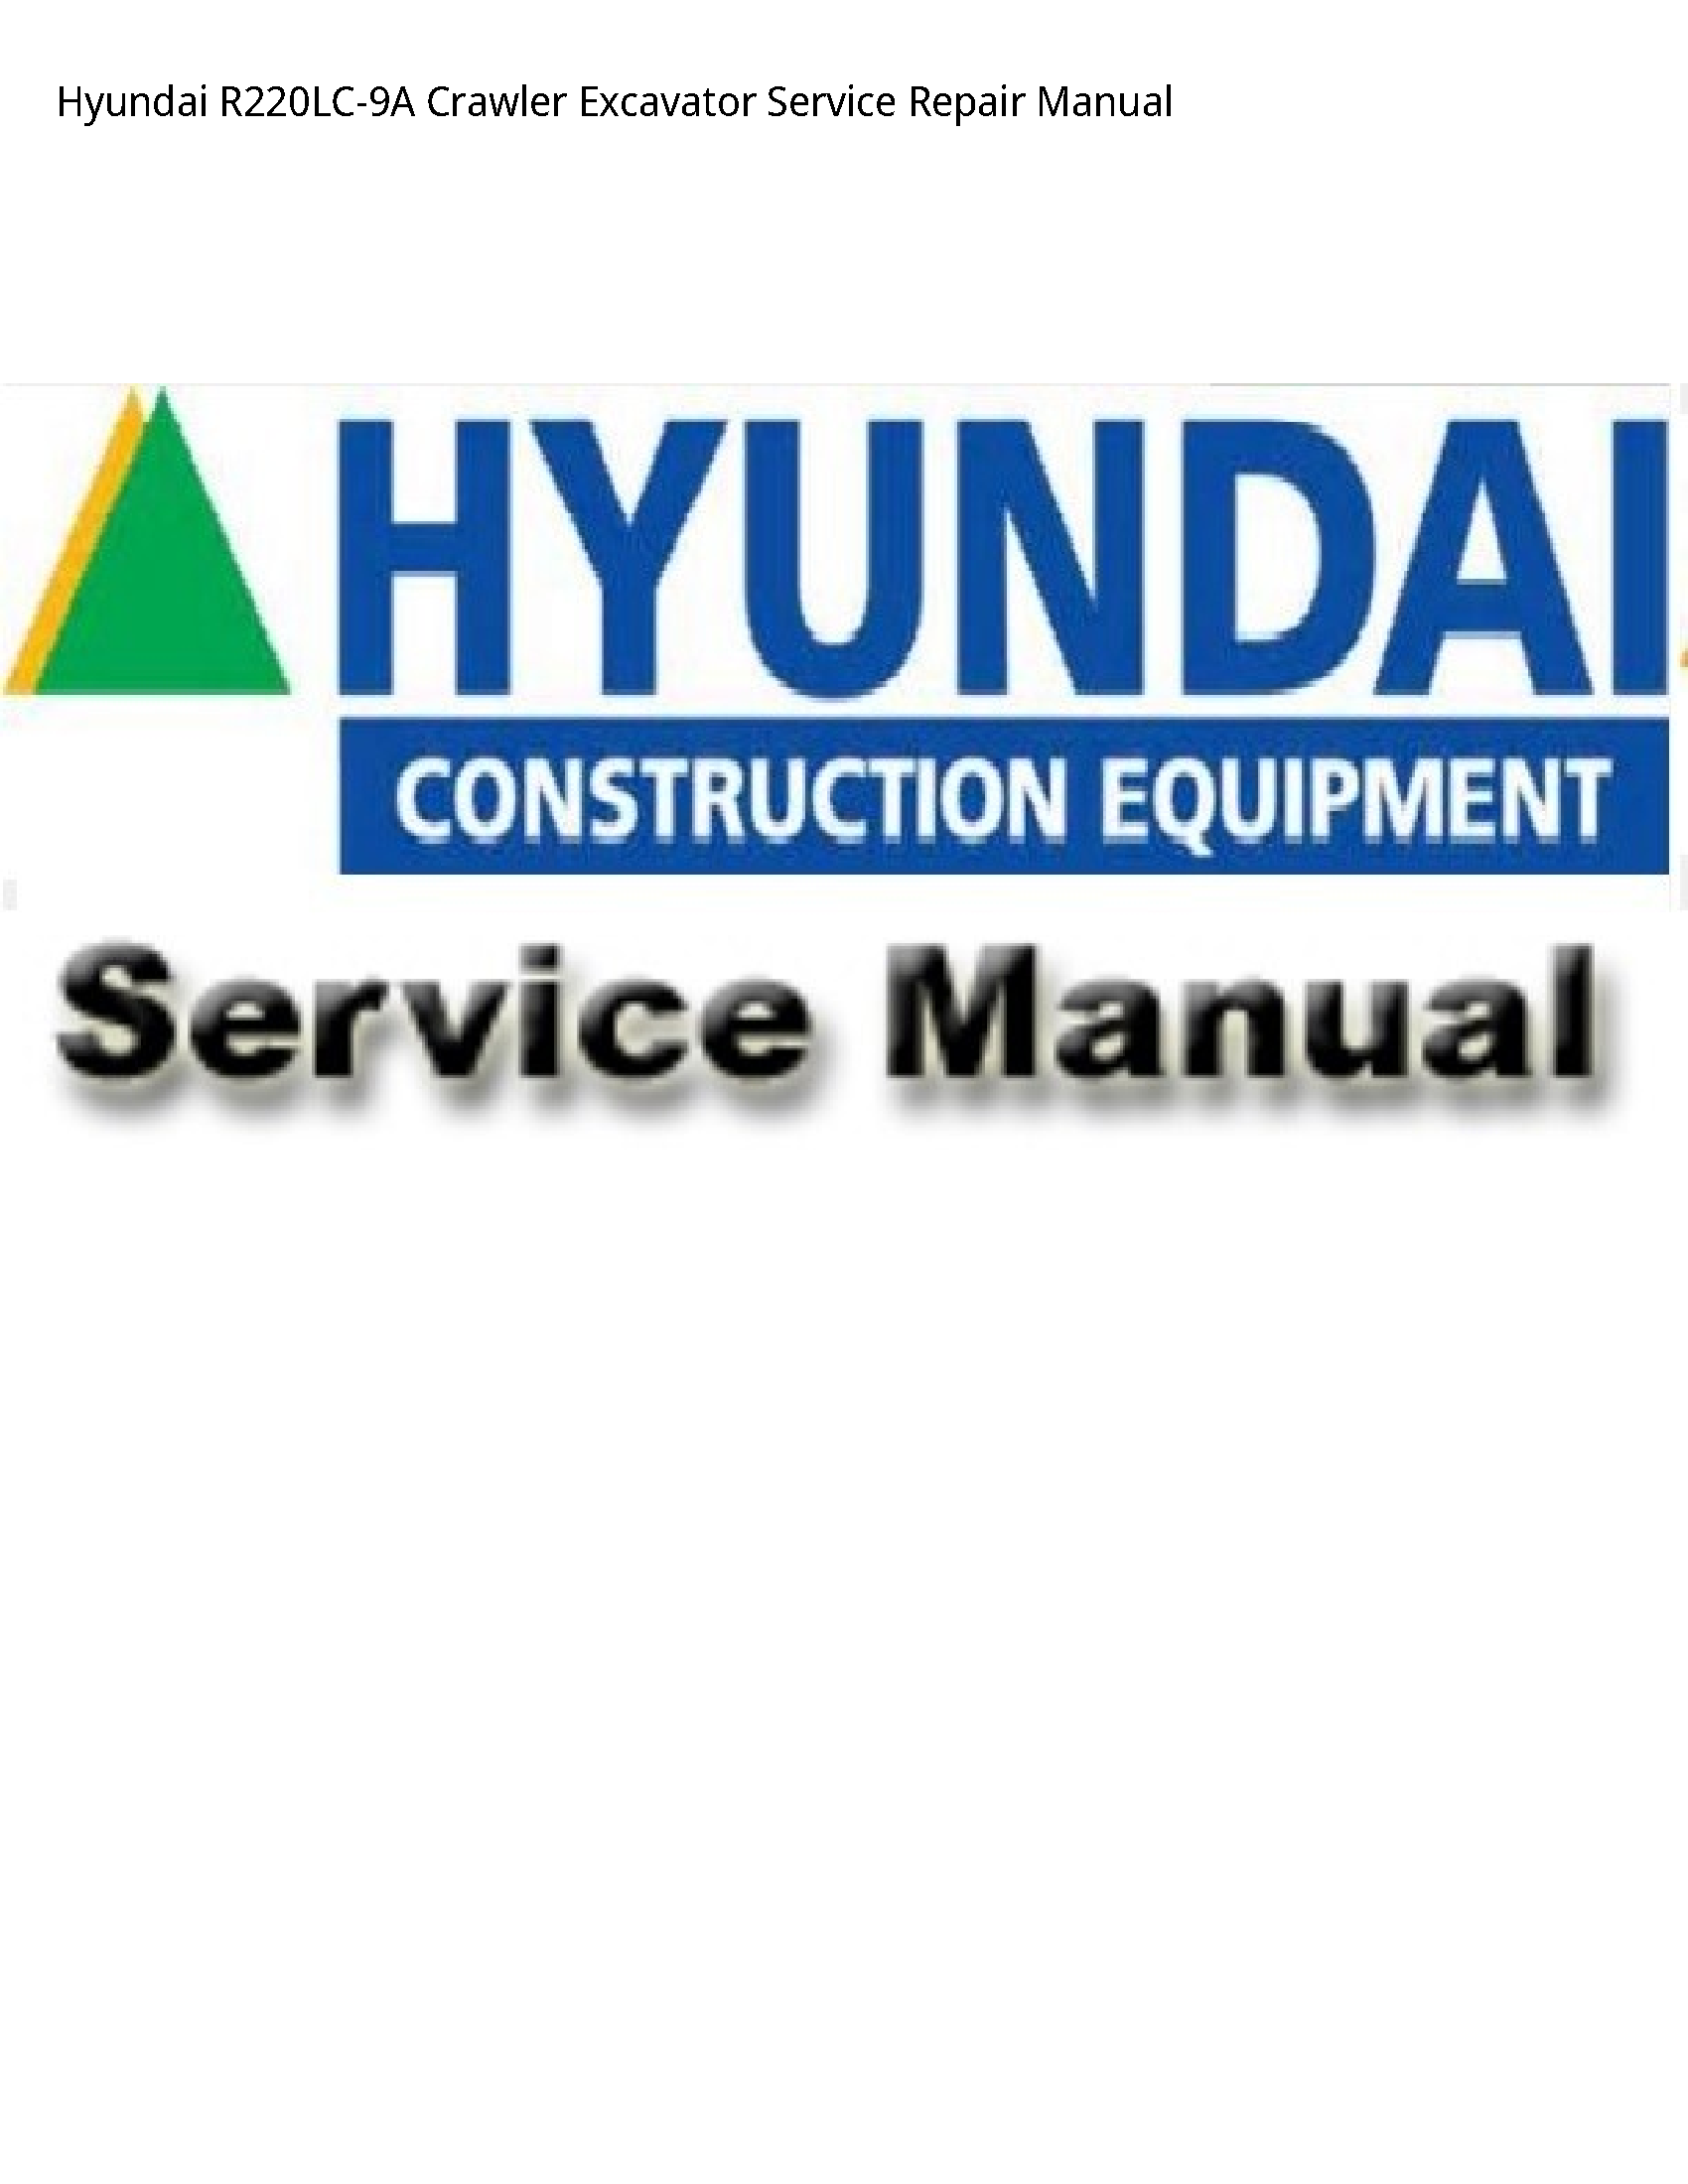 Hyundai R220LC-9A Crawler Excavator manual